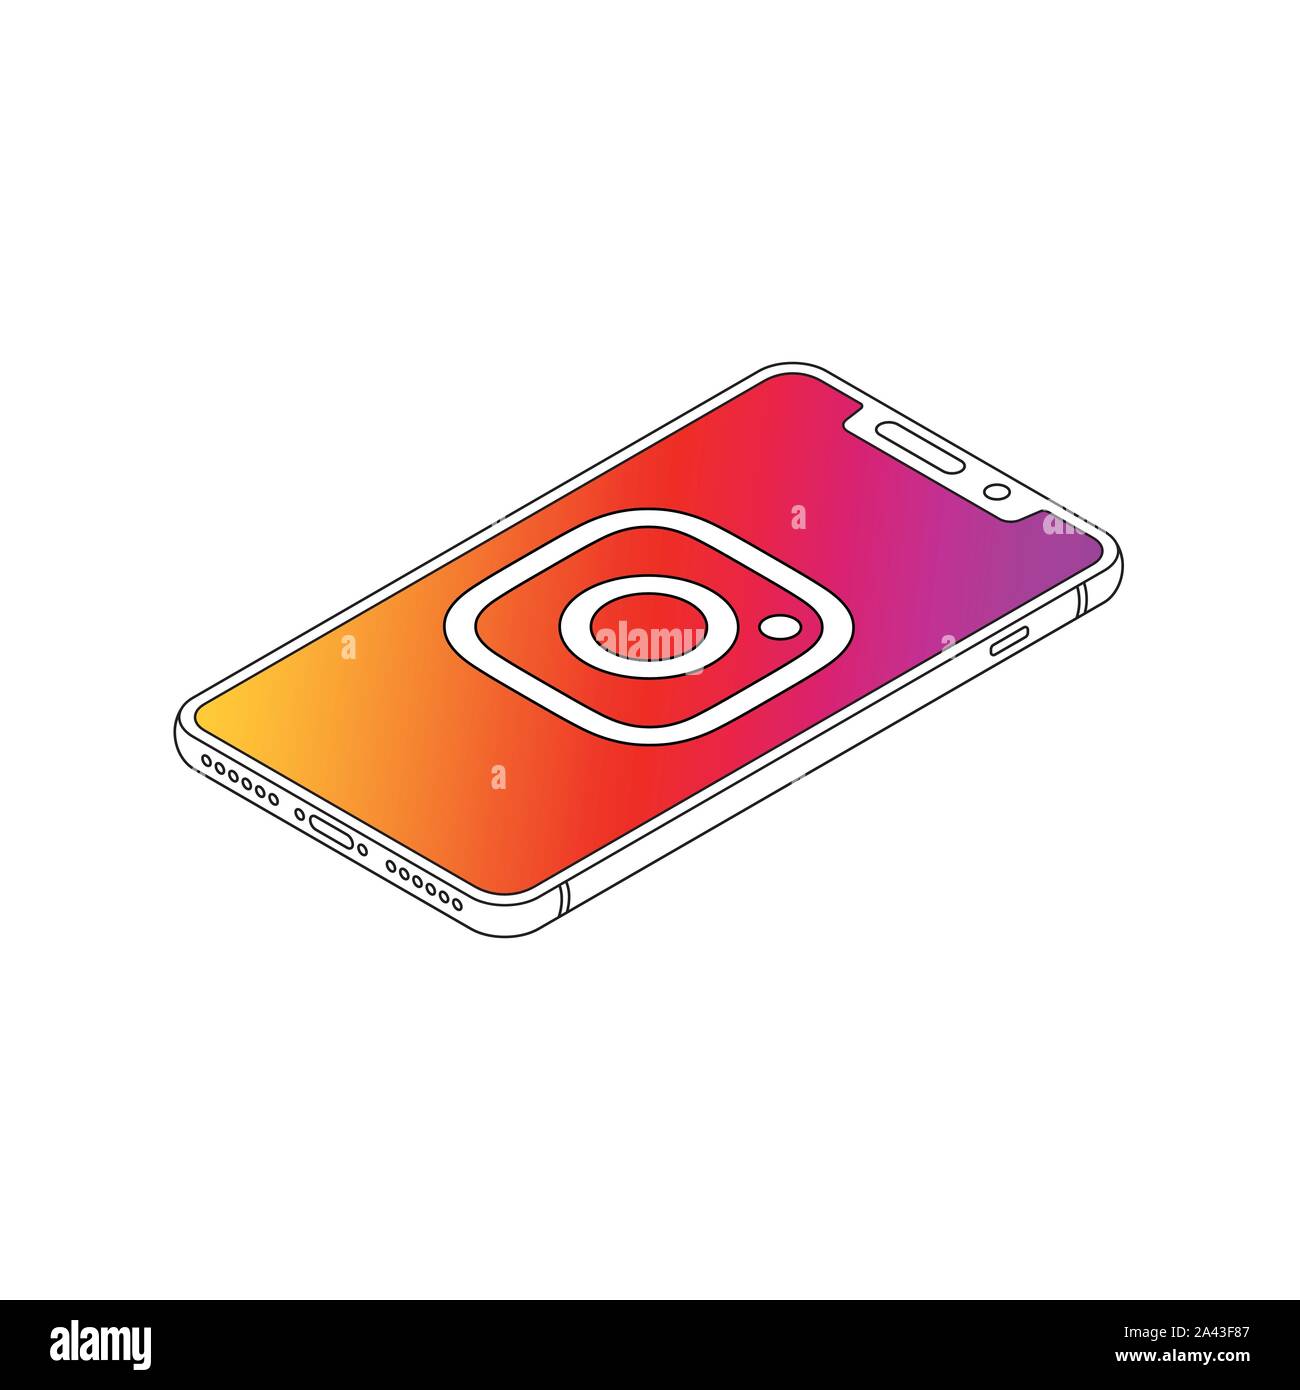 Instagram logo on iphone X display isometric outline vector illustration Stock Vector